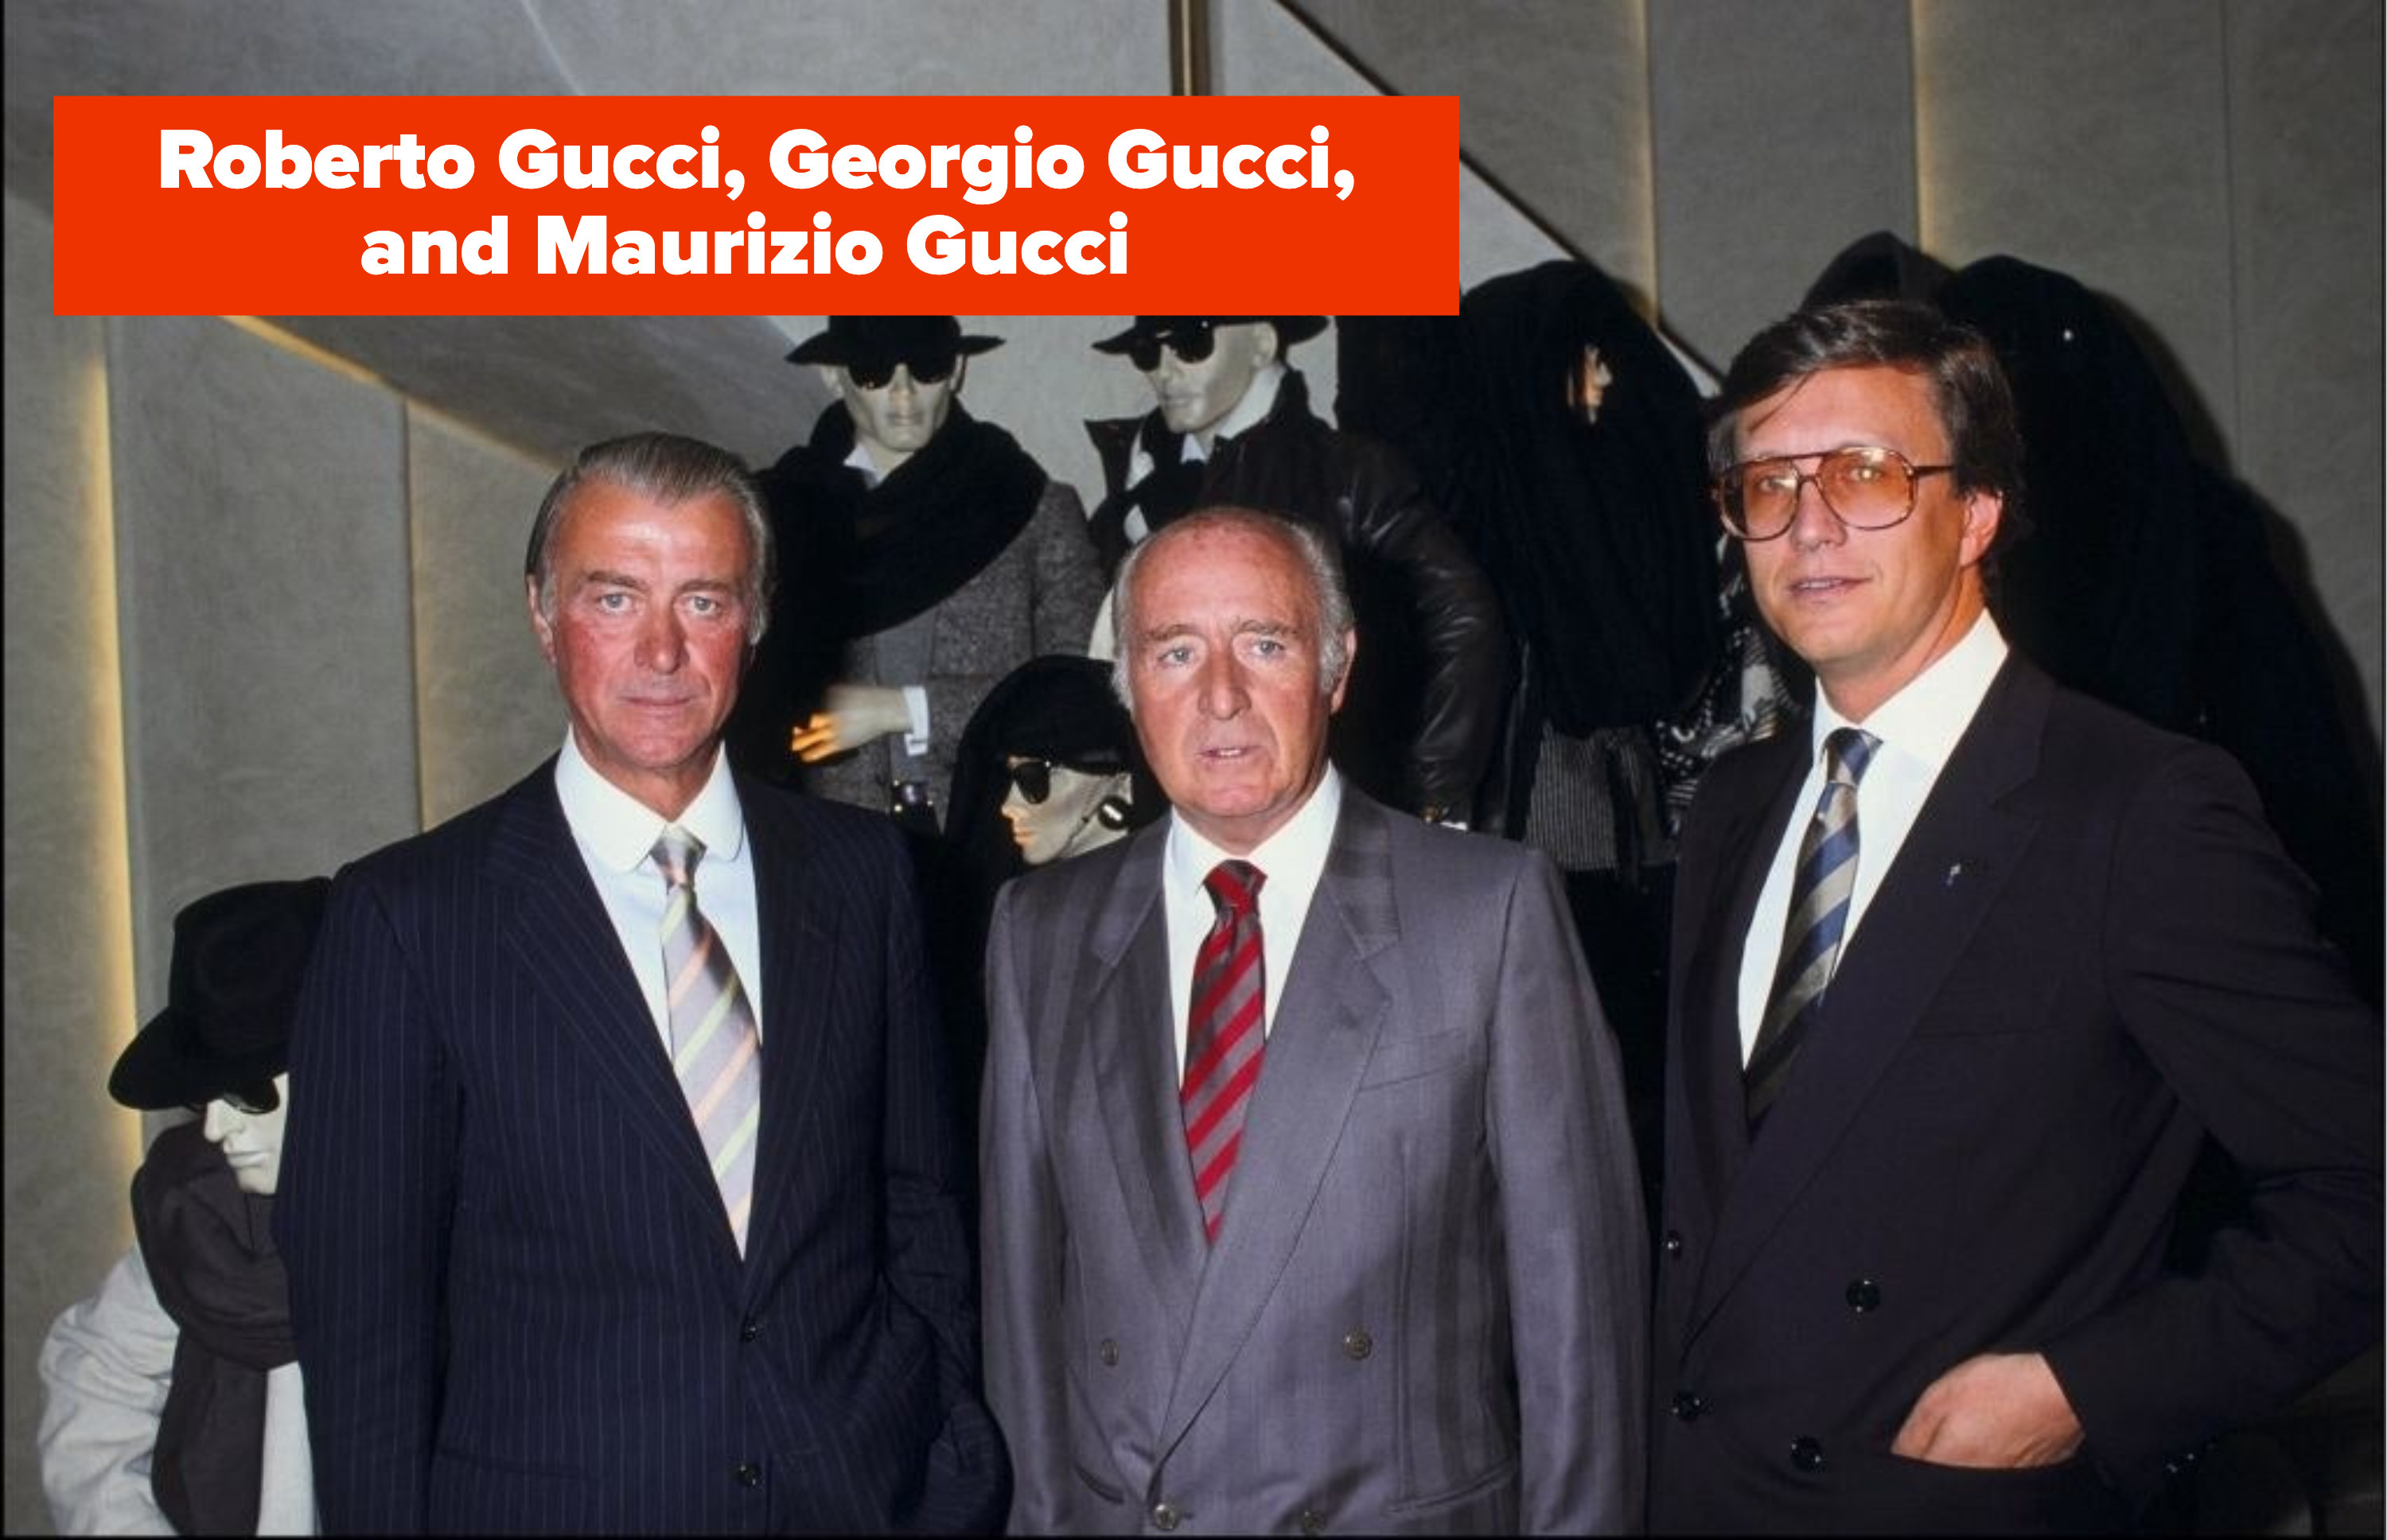 Roberto Gucci, Georgio Gucci, and Maurizio Gucci stand beside one another